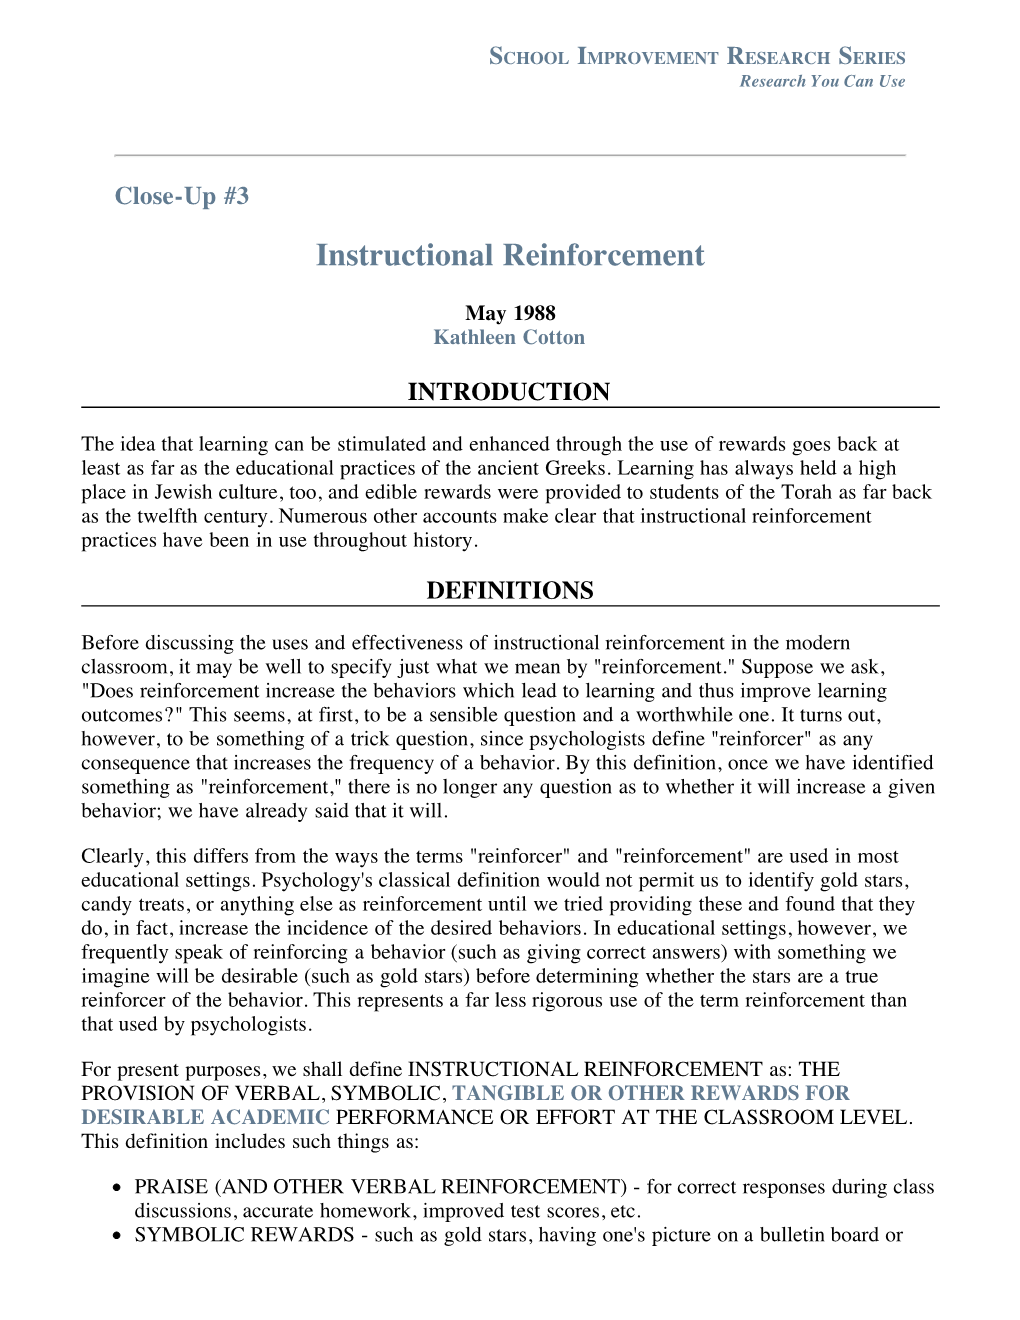 Instructional Reinforcement School Improvement Research Series (SIRS)